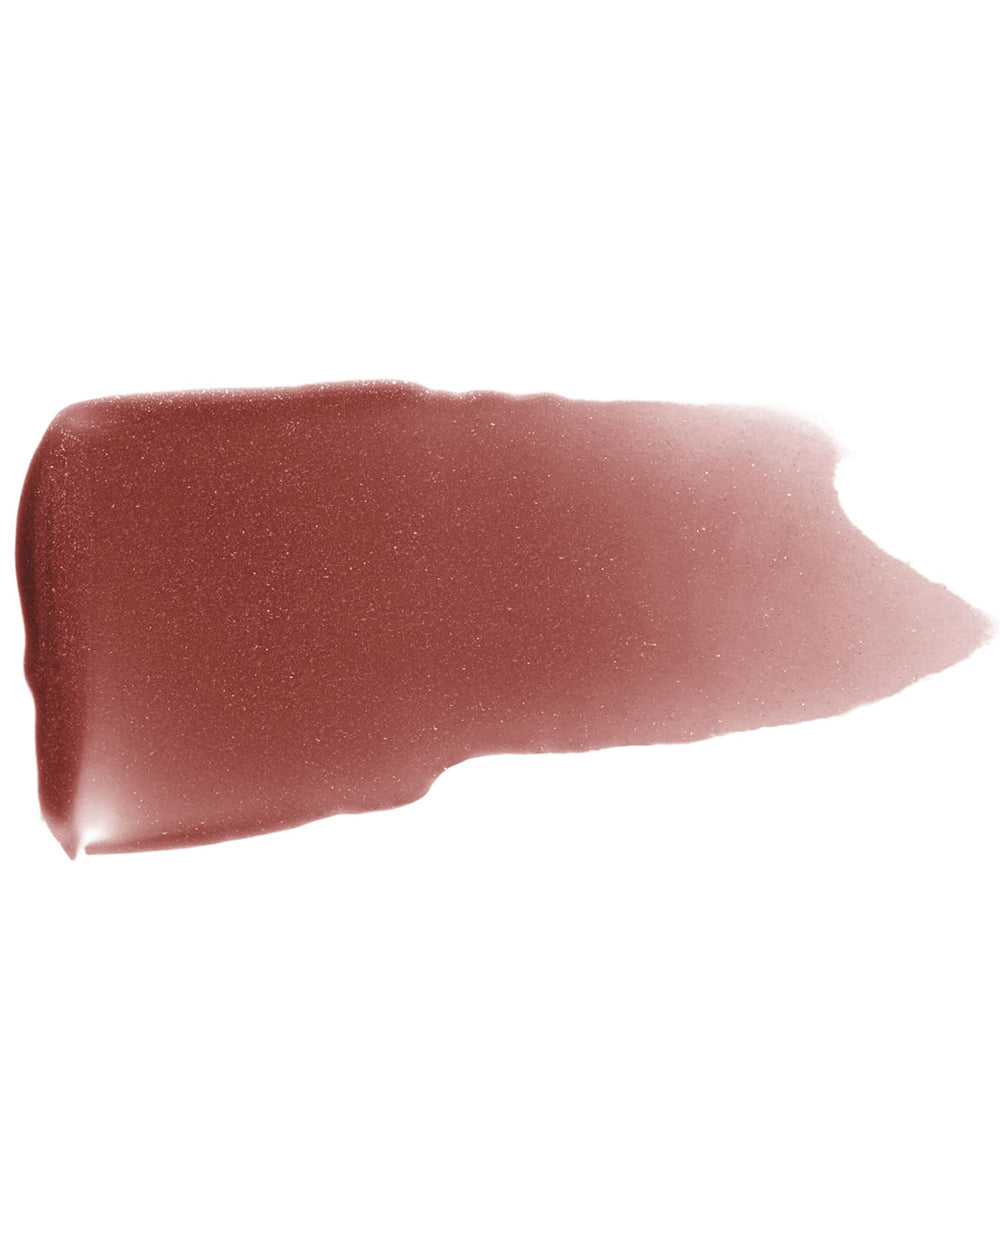 Stickgloss Lipstick in Brown Sugar